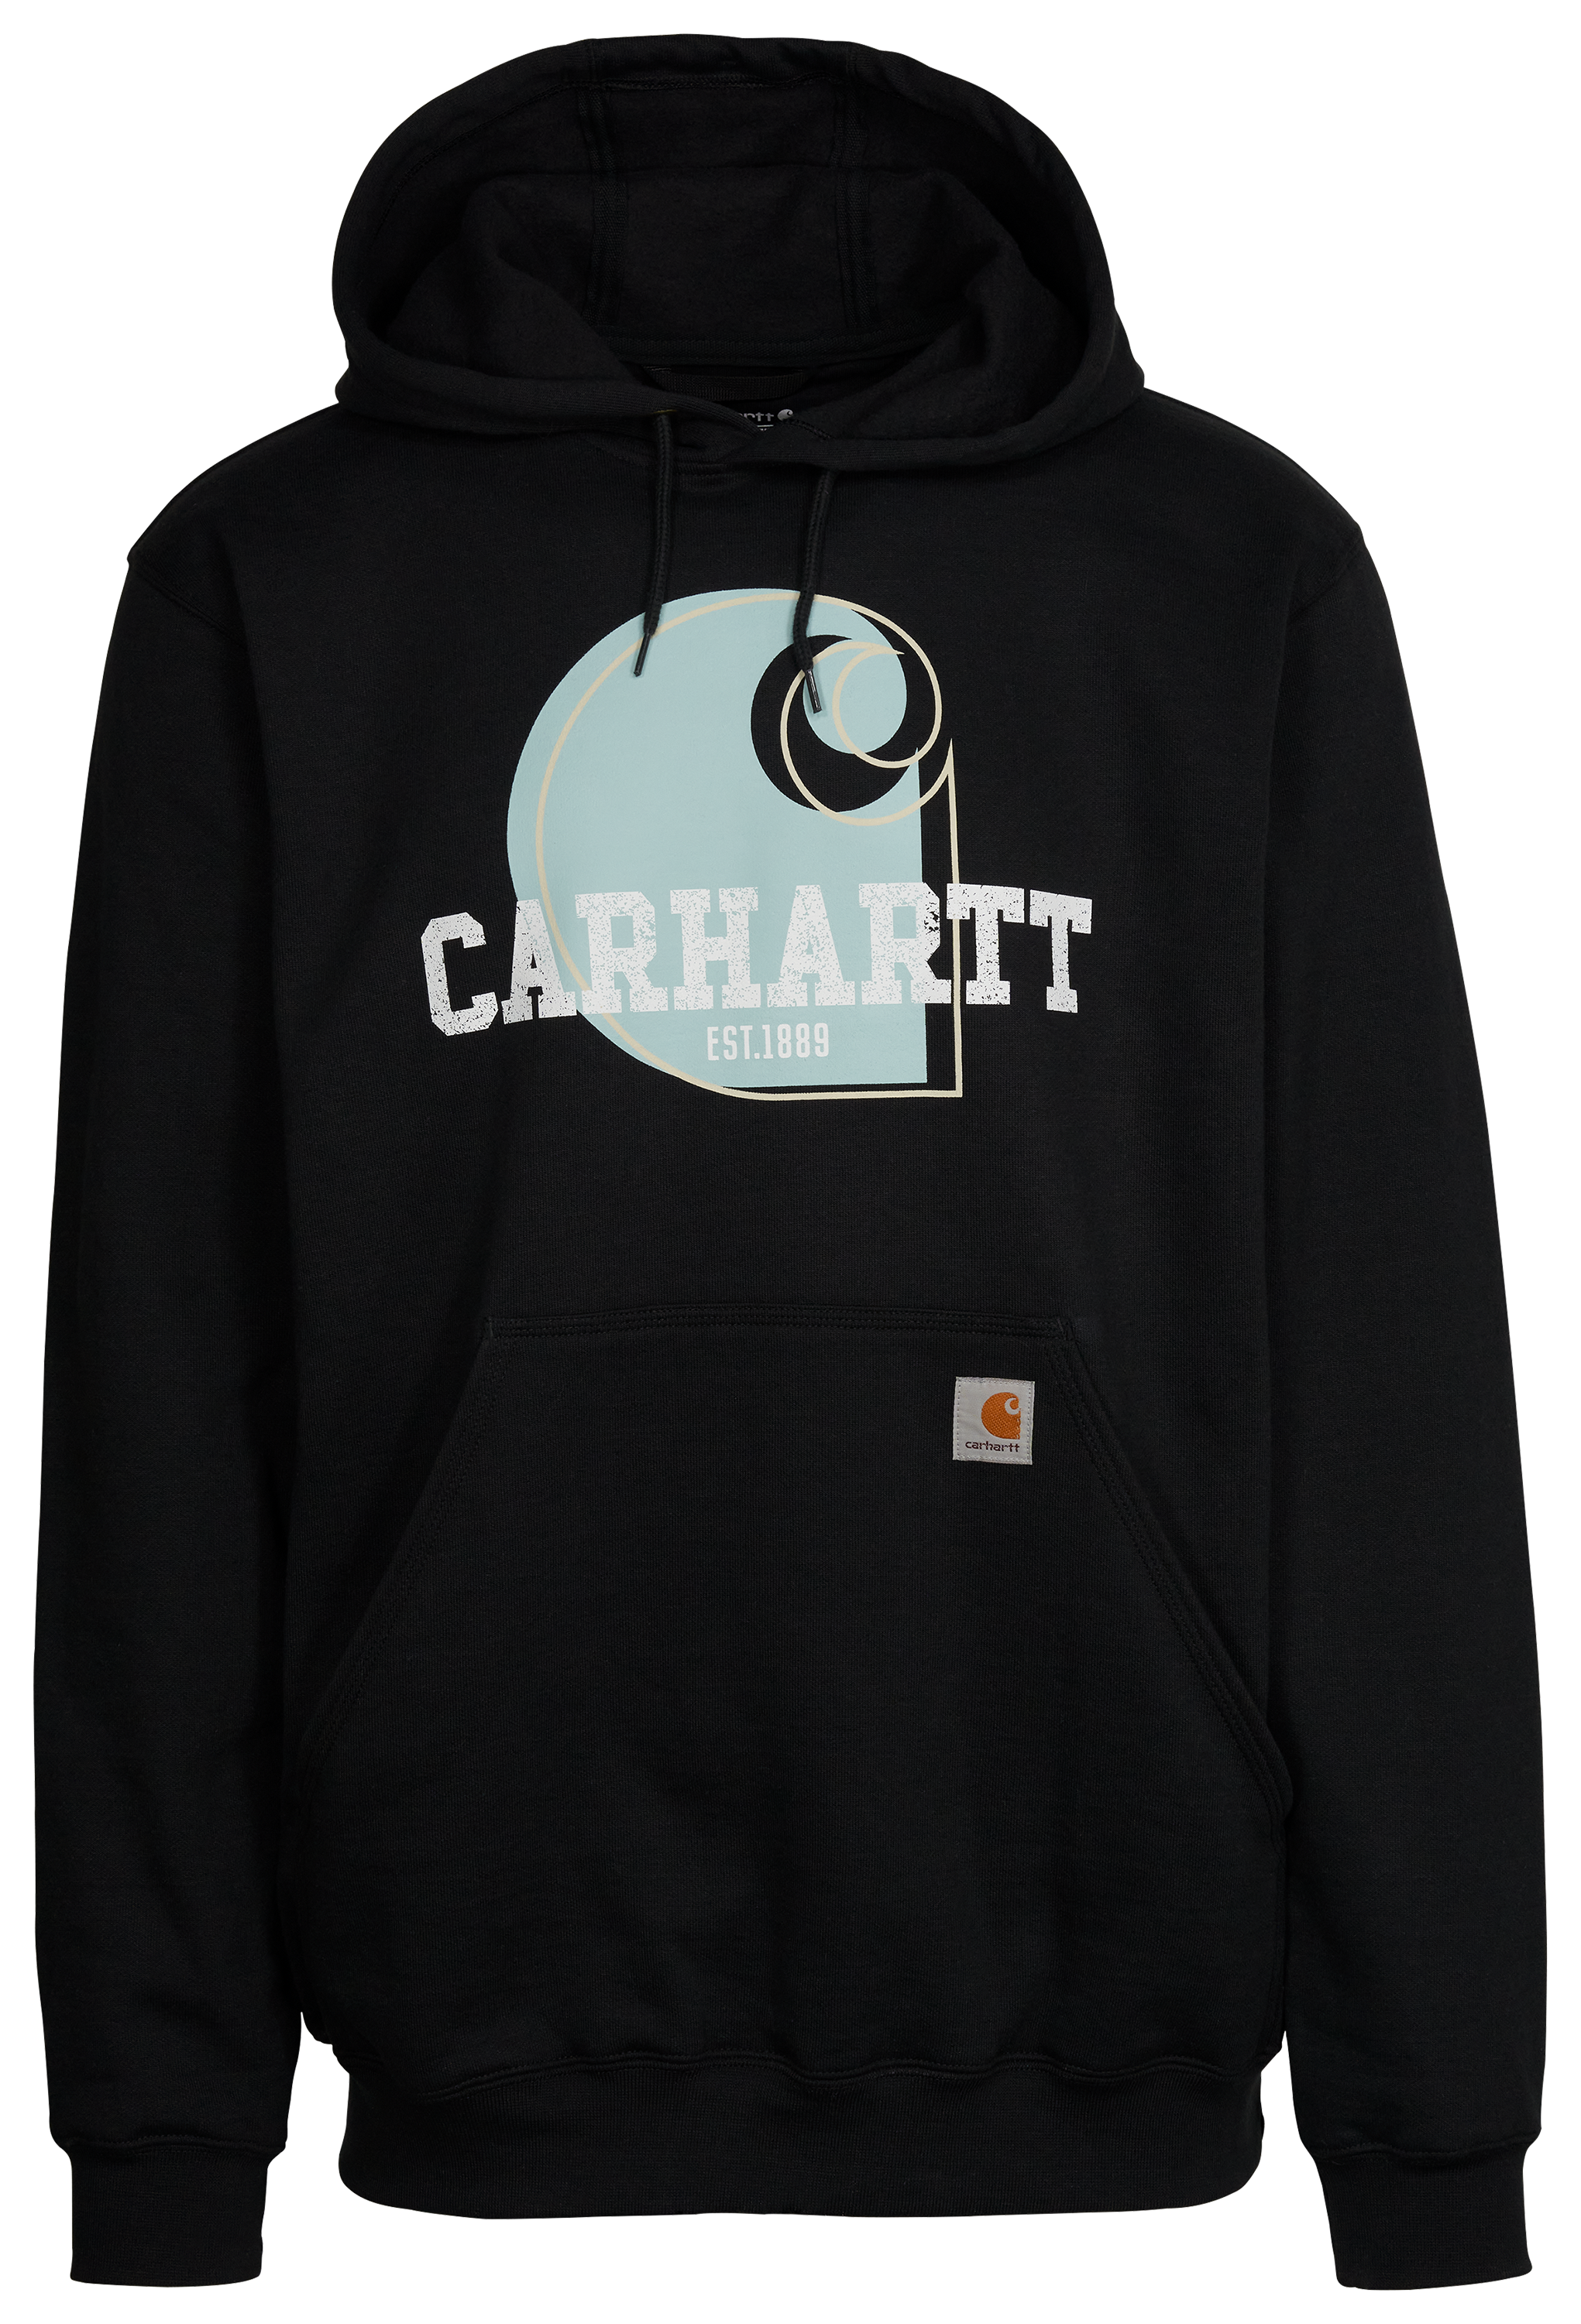 Carhartt Loose-Fit Midweight Logo Long-Sleeve Hoodie for Men